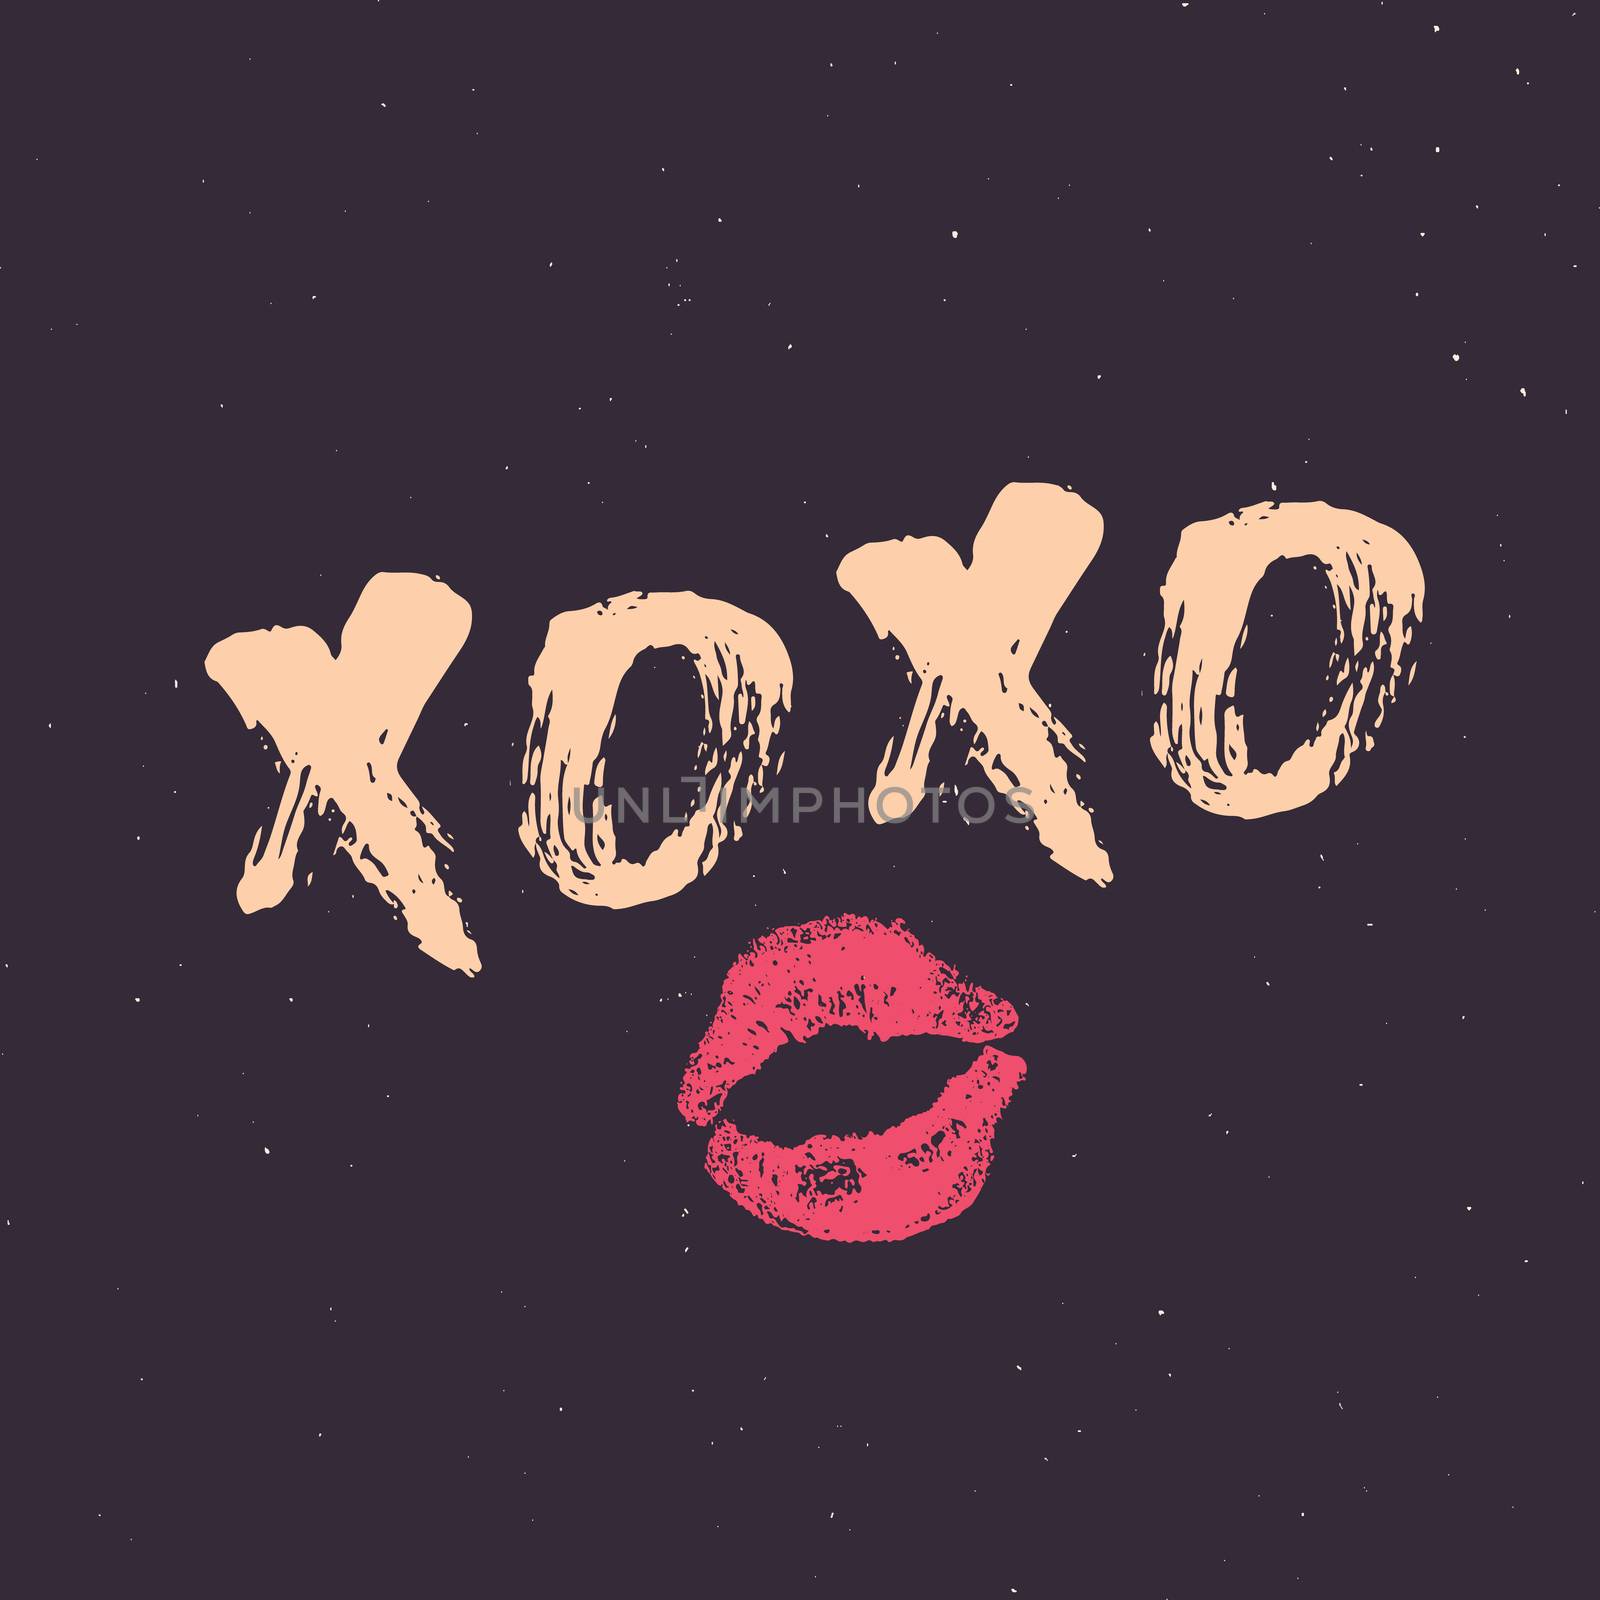 XOXO brush lettering sign, Grunge calligraphic hugs and kisses Phrase, Internet slang abbreviation XOXO symbols, vector illustration by Lemon_workshop